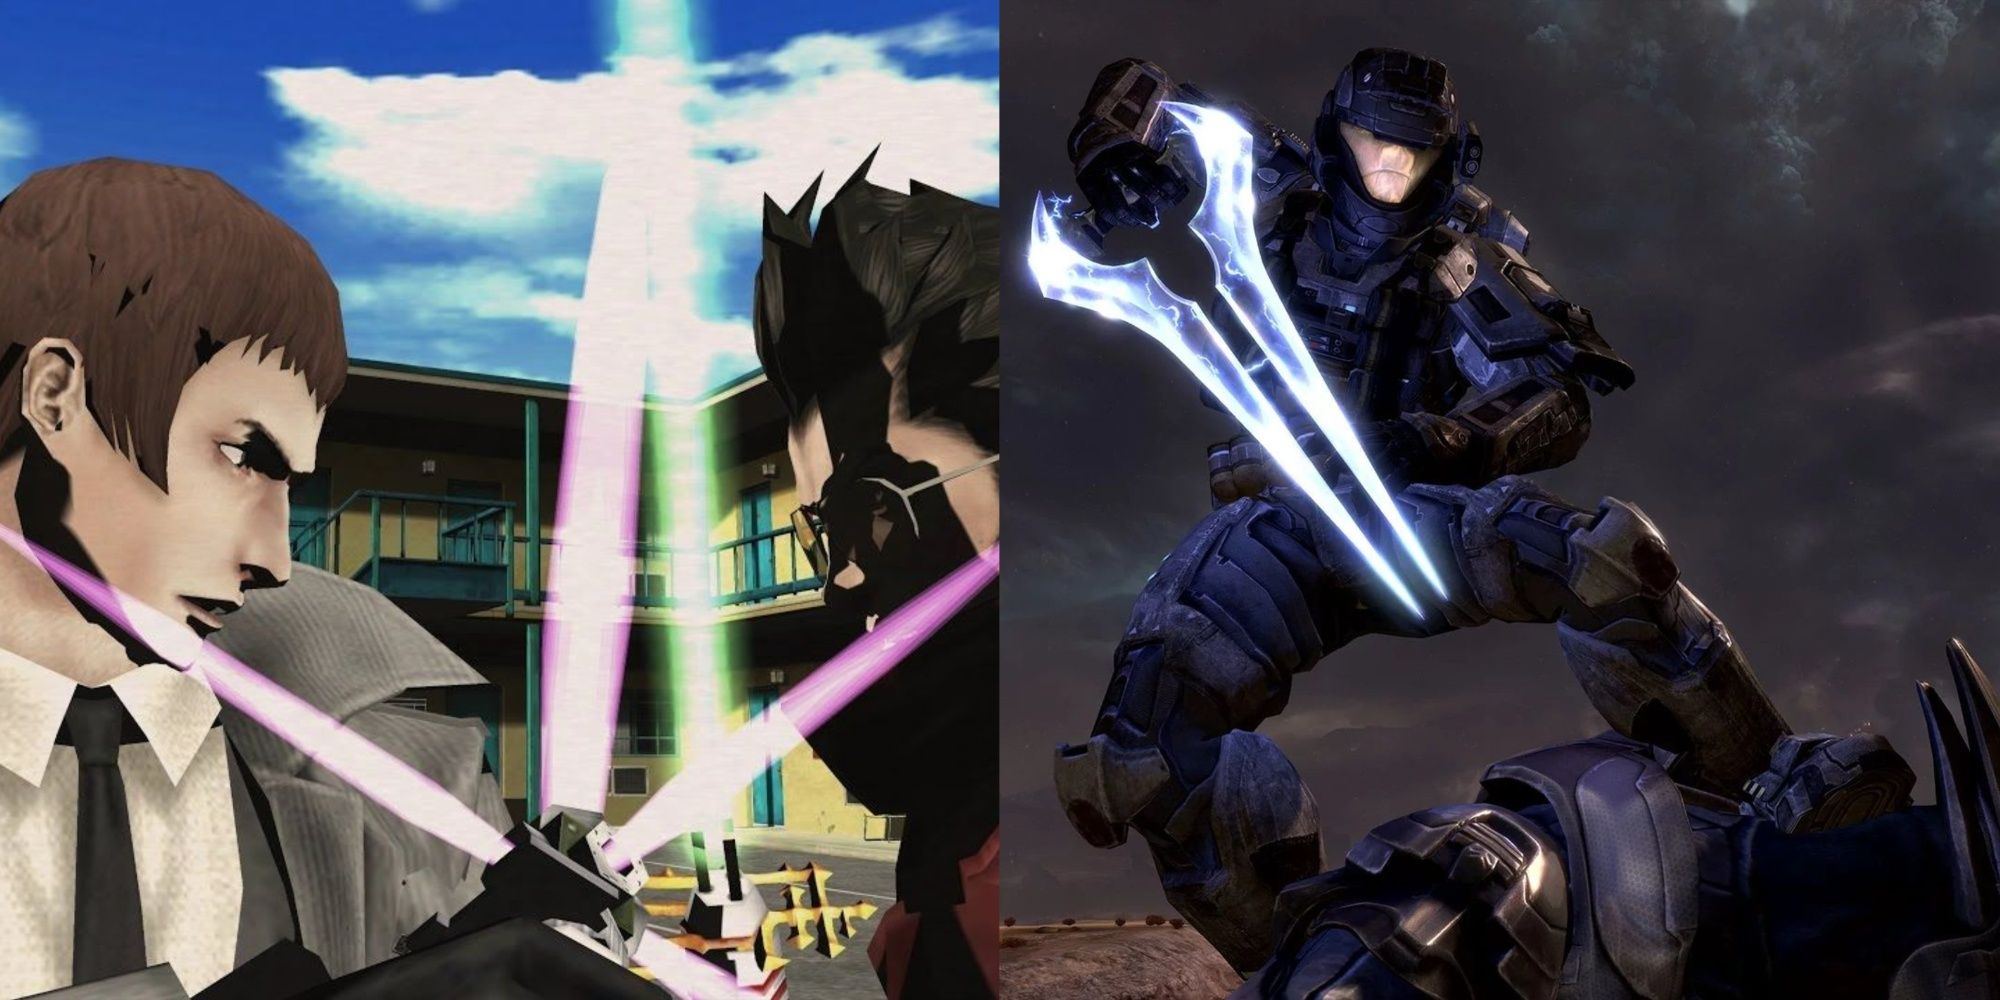 The Best Laser Swords In Video Games That Aren’t Lightsabers – Kaki ...